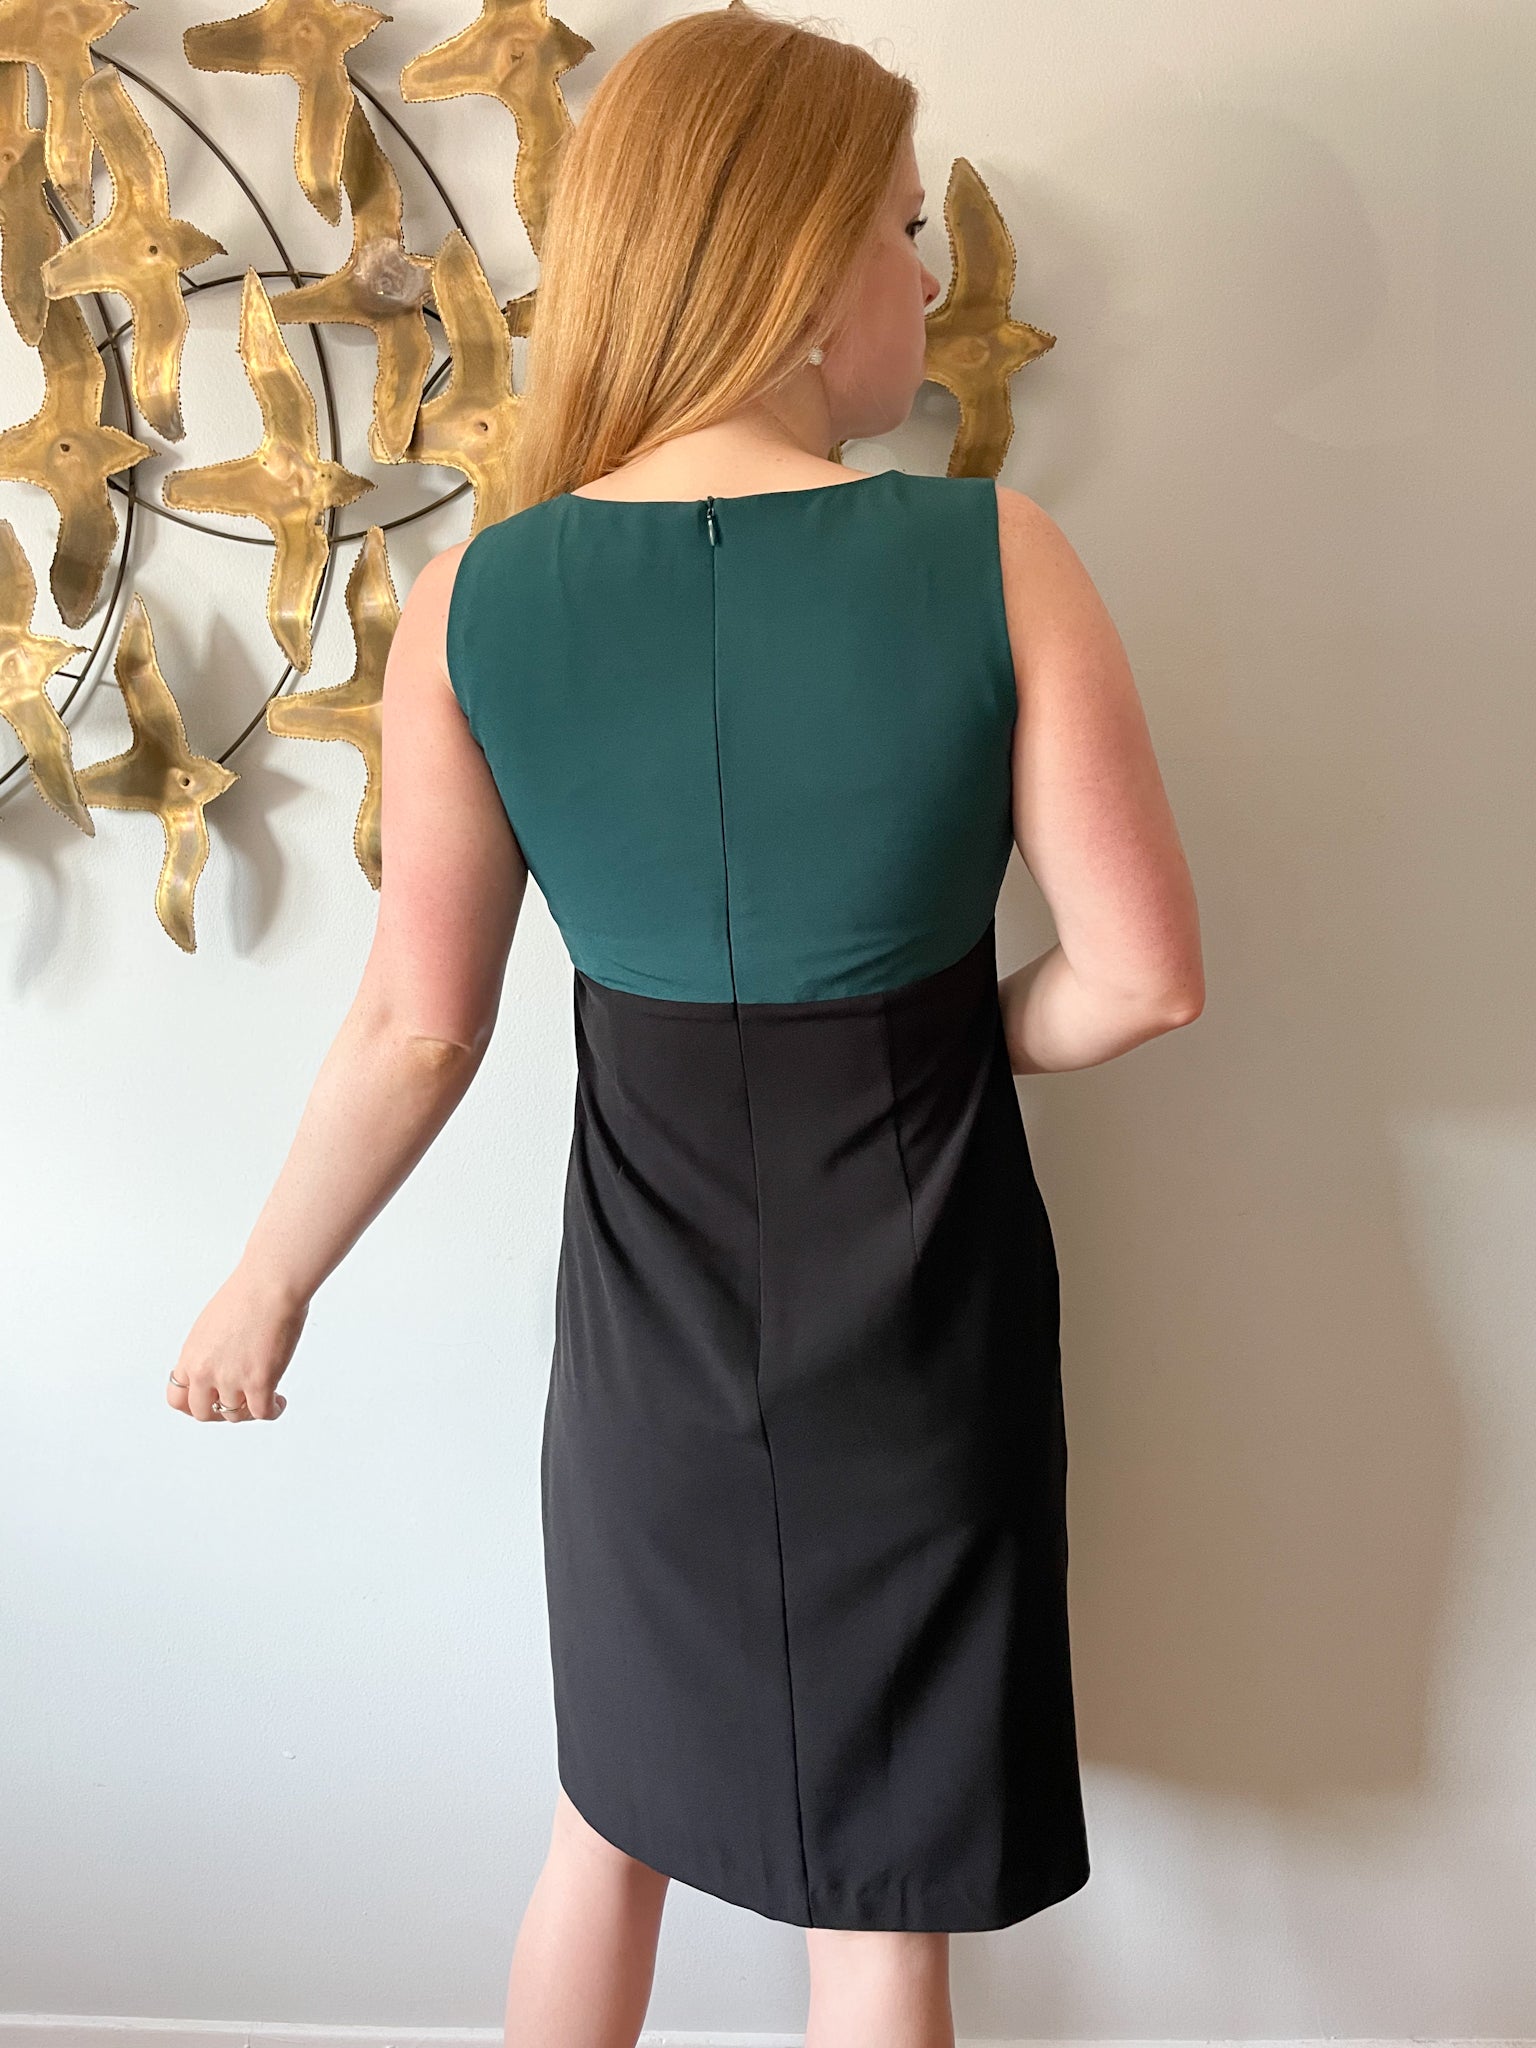 Spanner Forest Green Black Colourblock Sheath Dress - Size 6 – Le